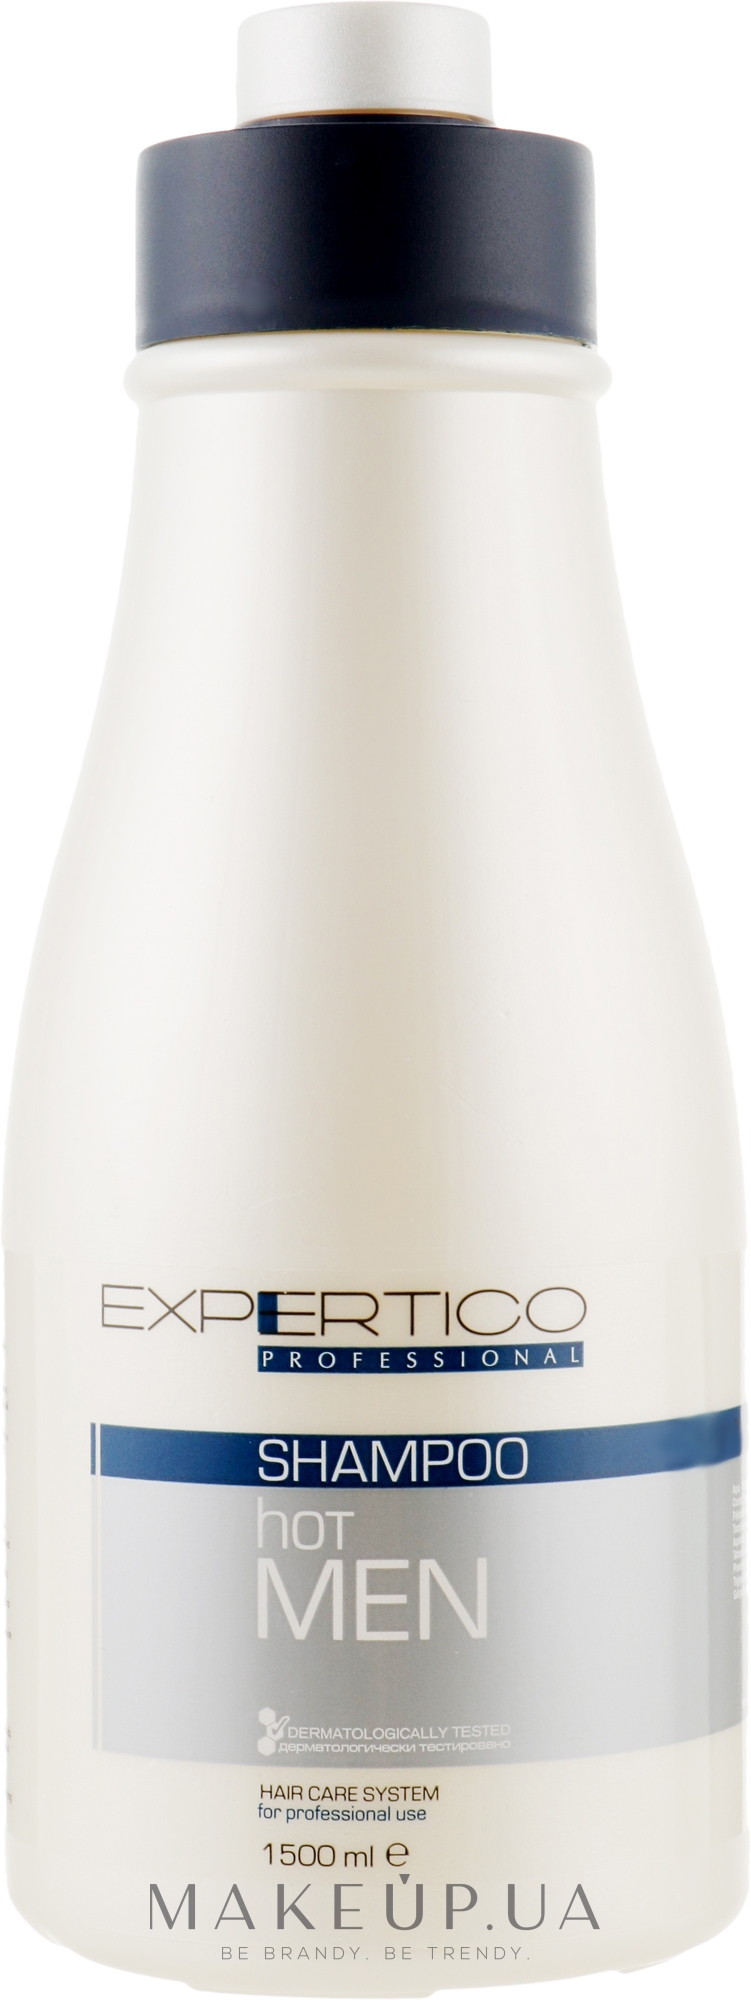 Шампунь для мужчин - Tico Professional Expertico Hot Men Shampoo — фото 1500ml